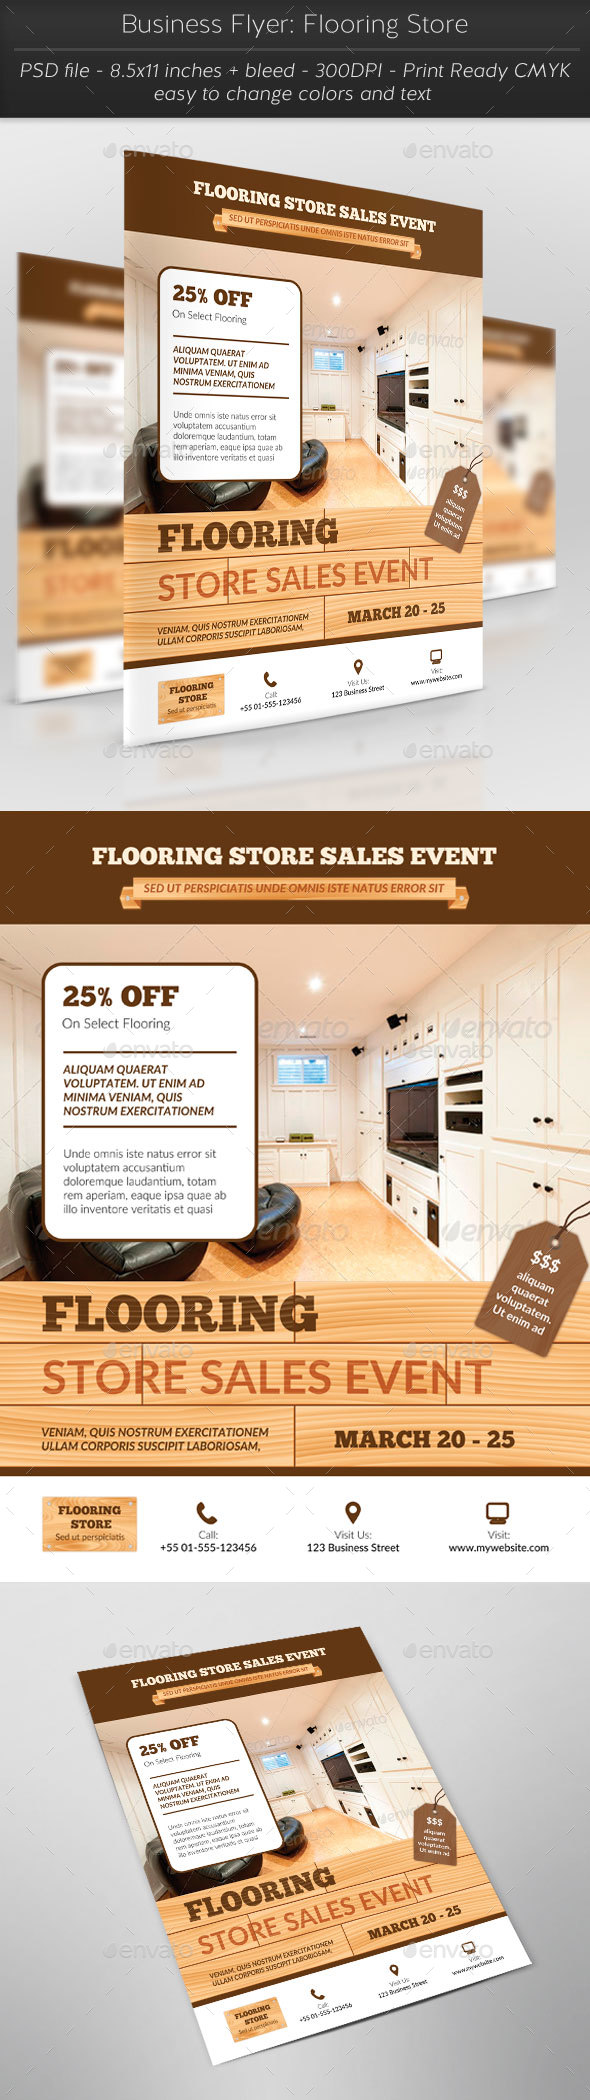 Business Flyer: Flooring Store